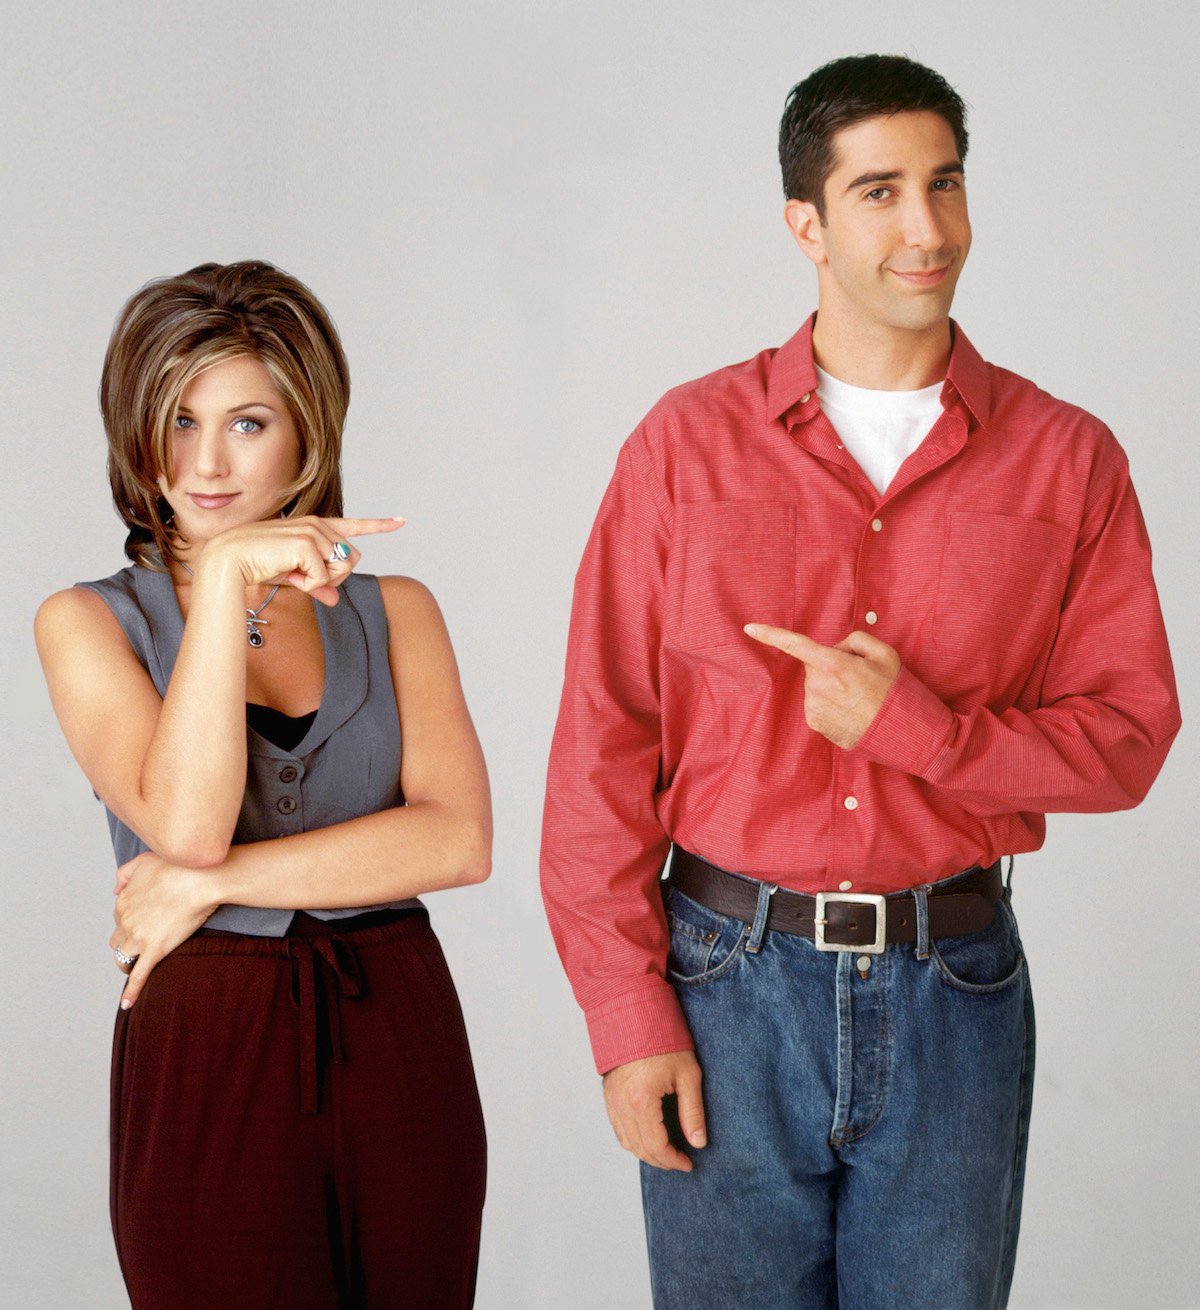 Friends: 60% of People Think Ross and Rachel Were on a Break